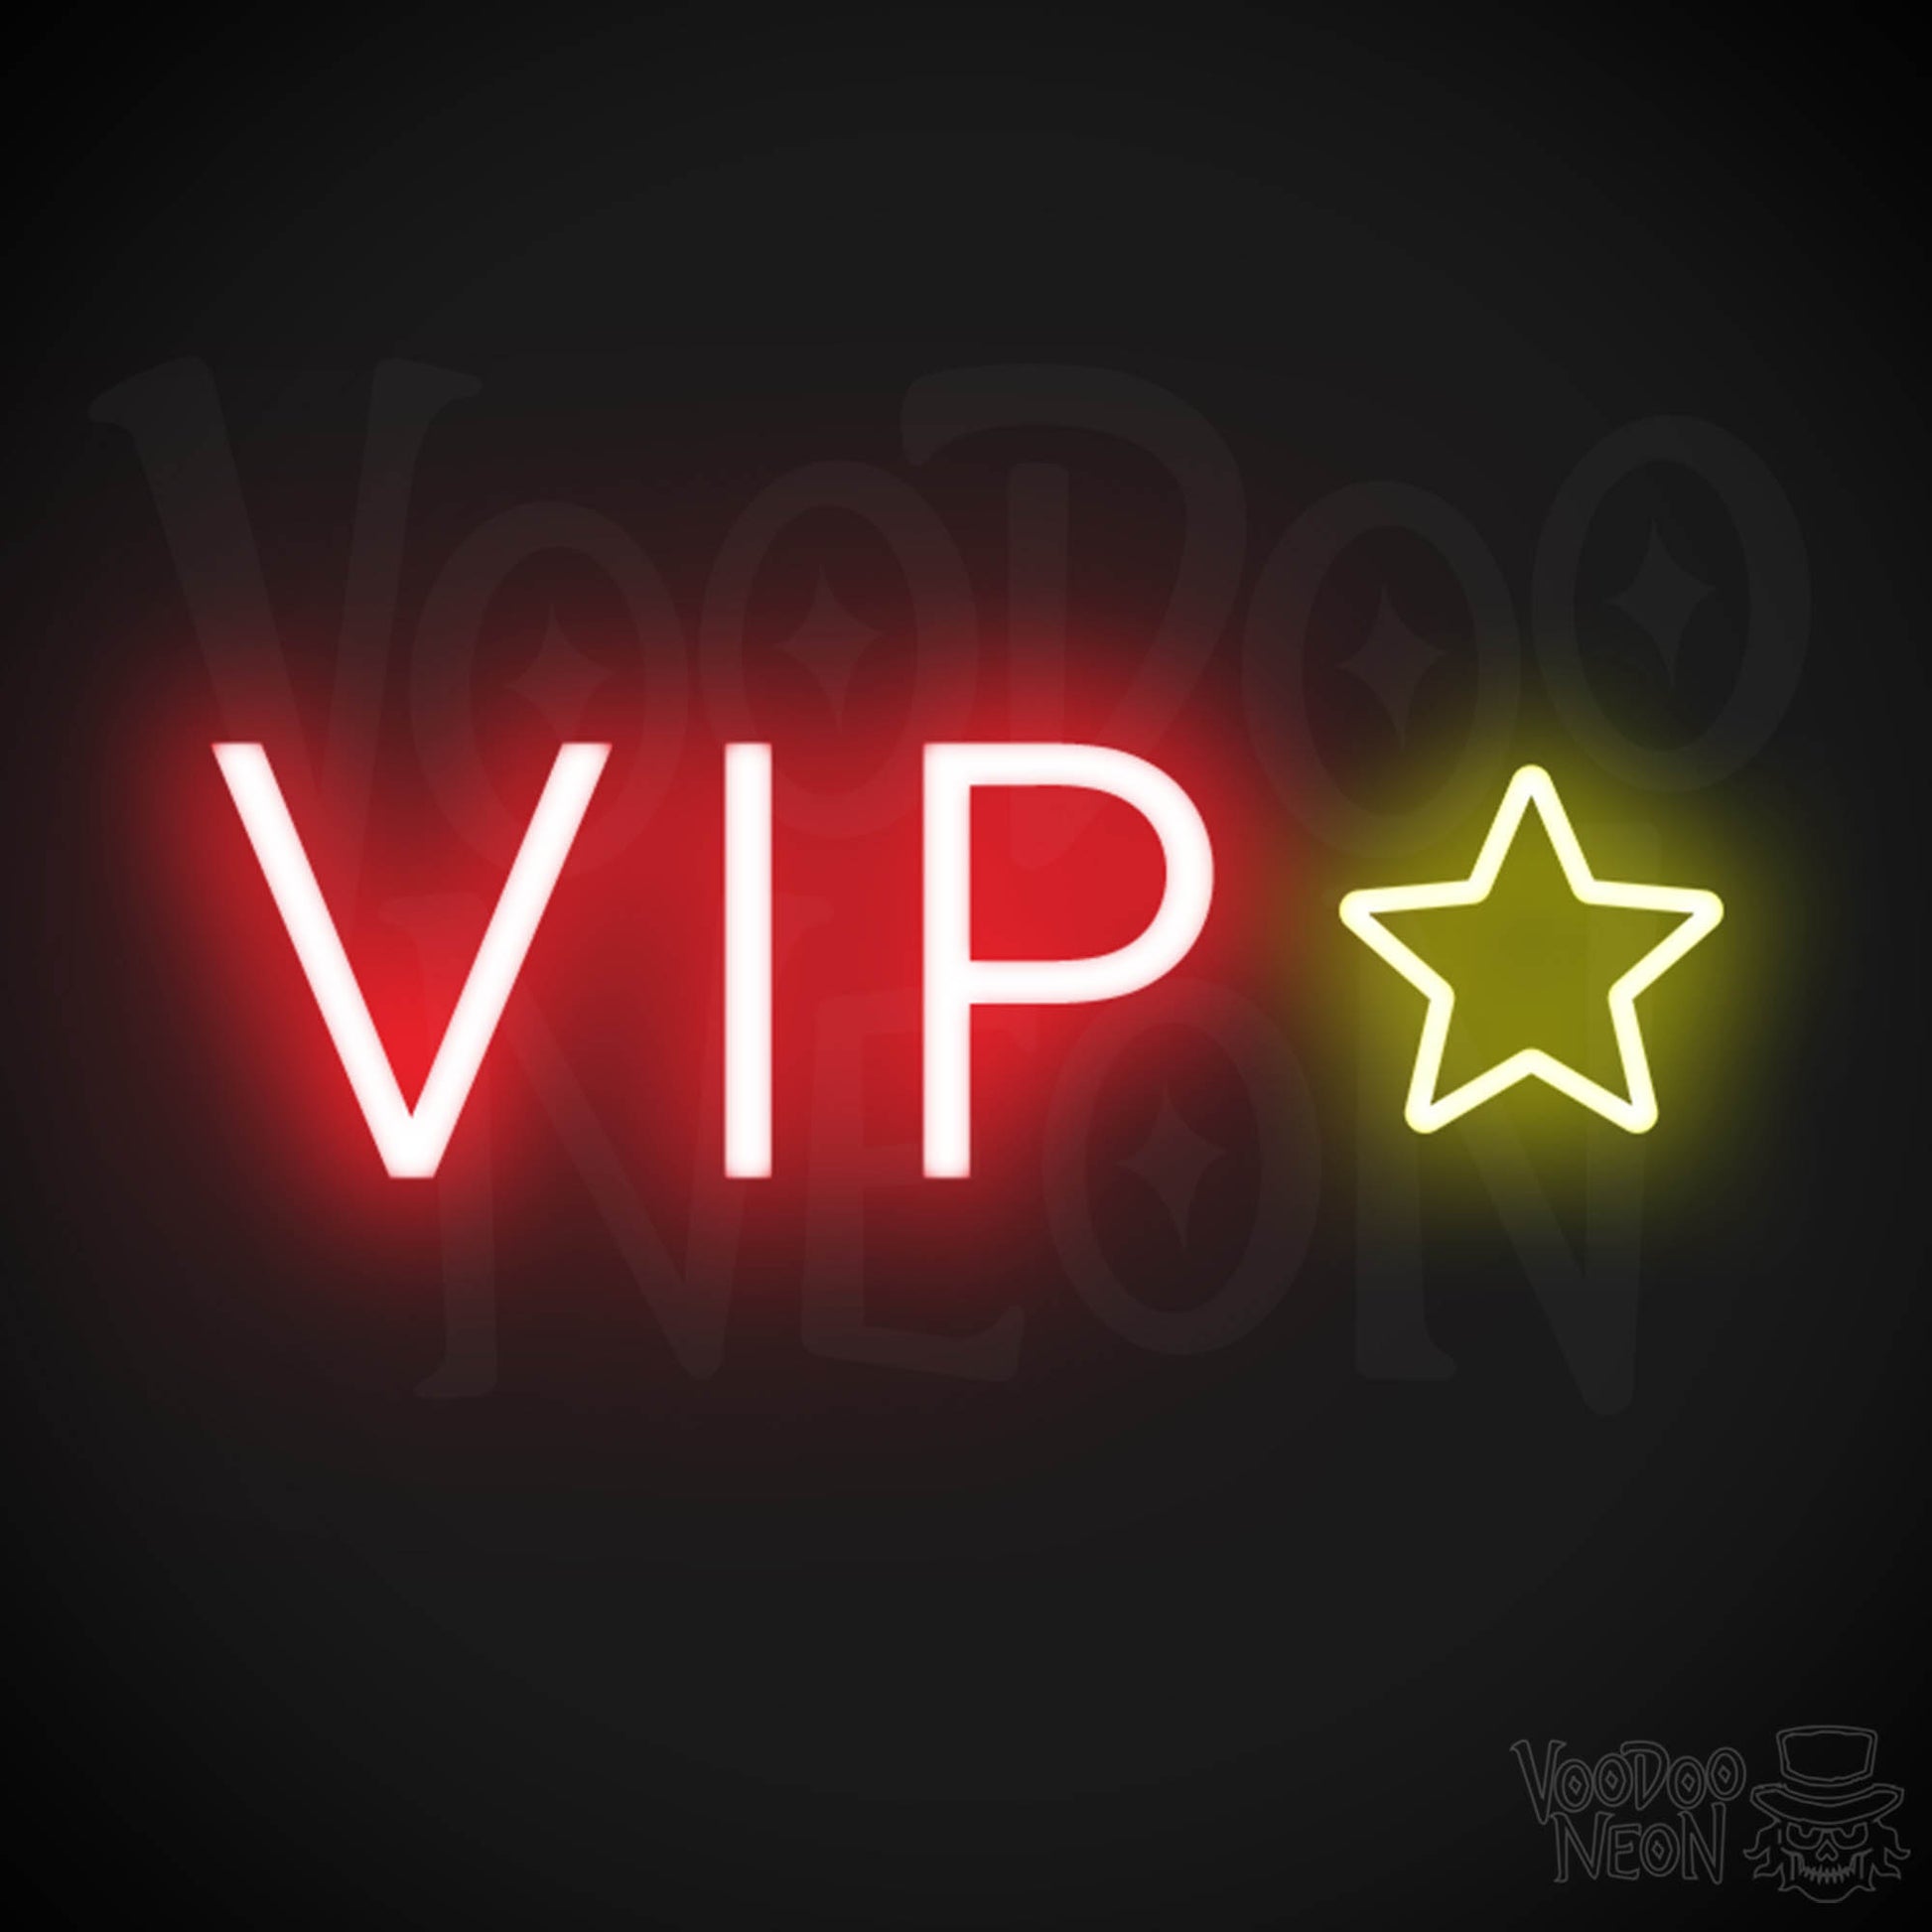 VIP Neon Sign - Neon VIP Sign - VIP LED Sign - Color Multi-Color